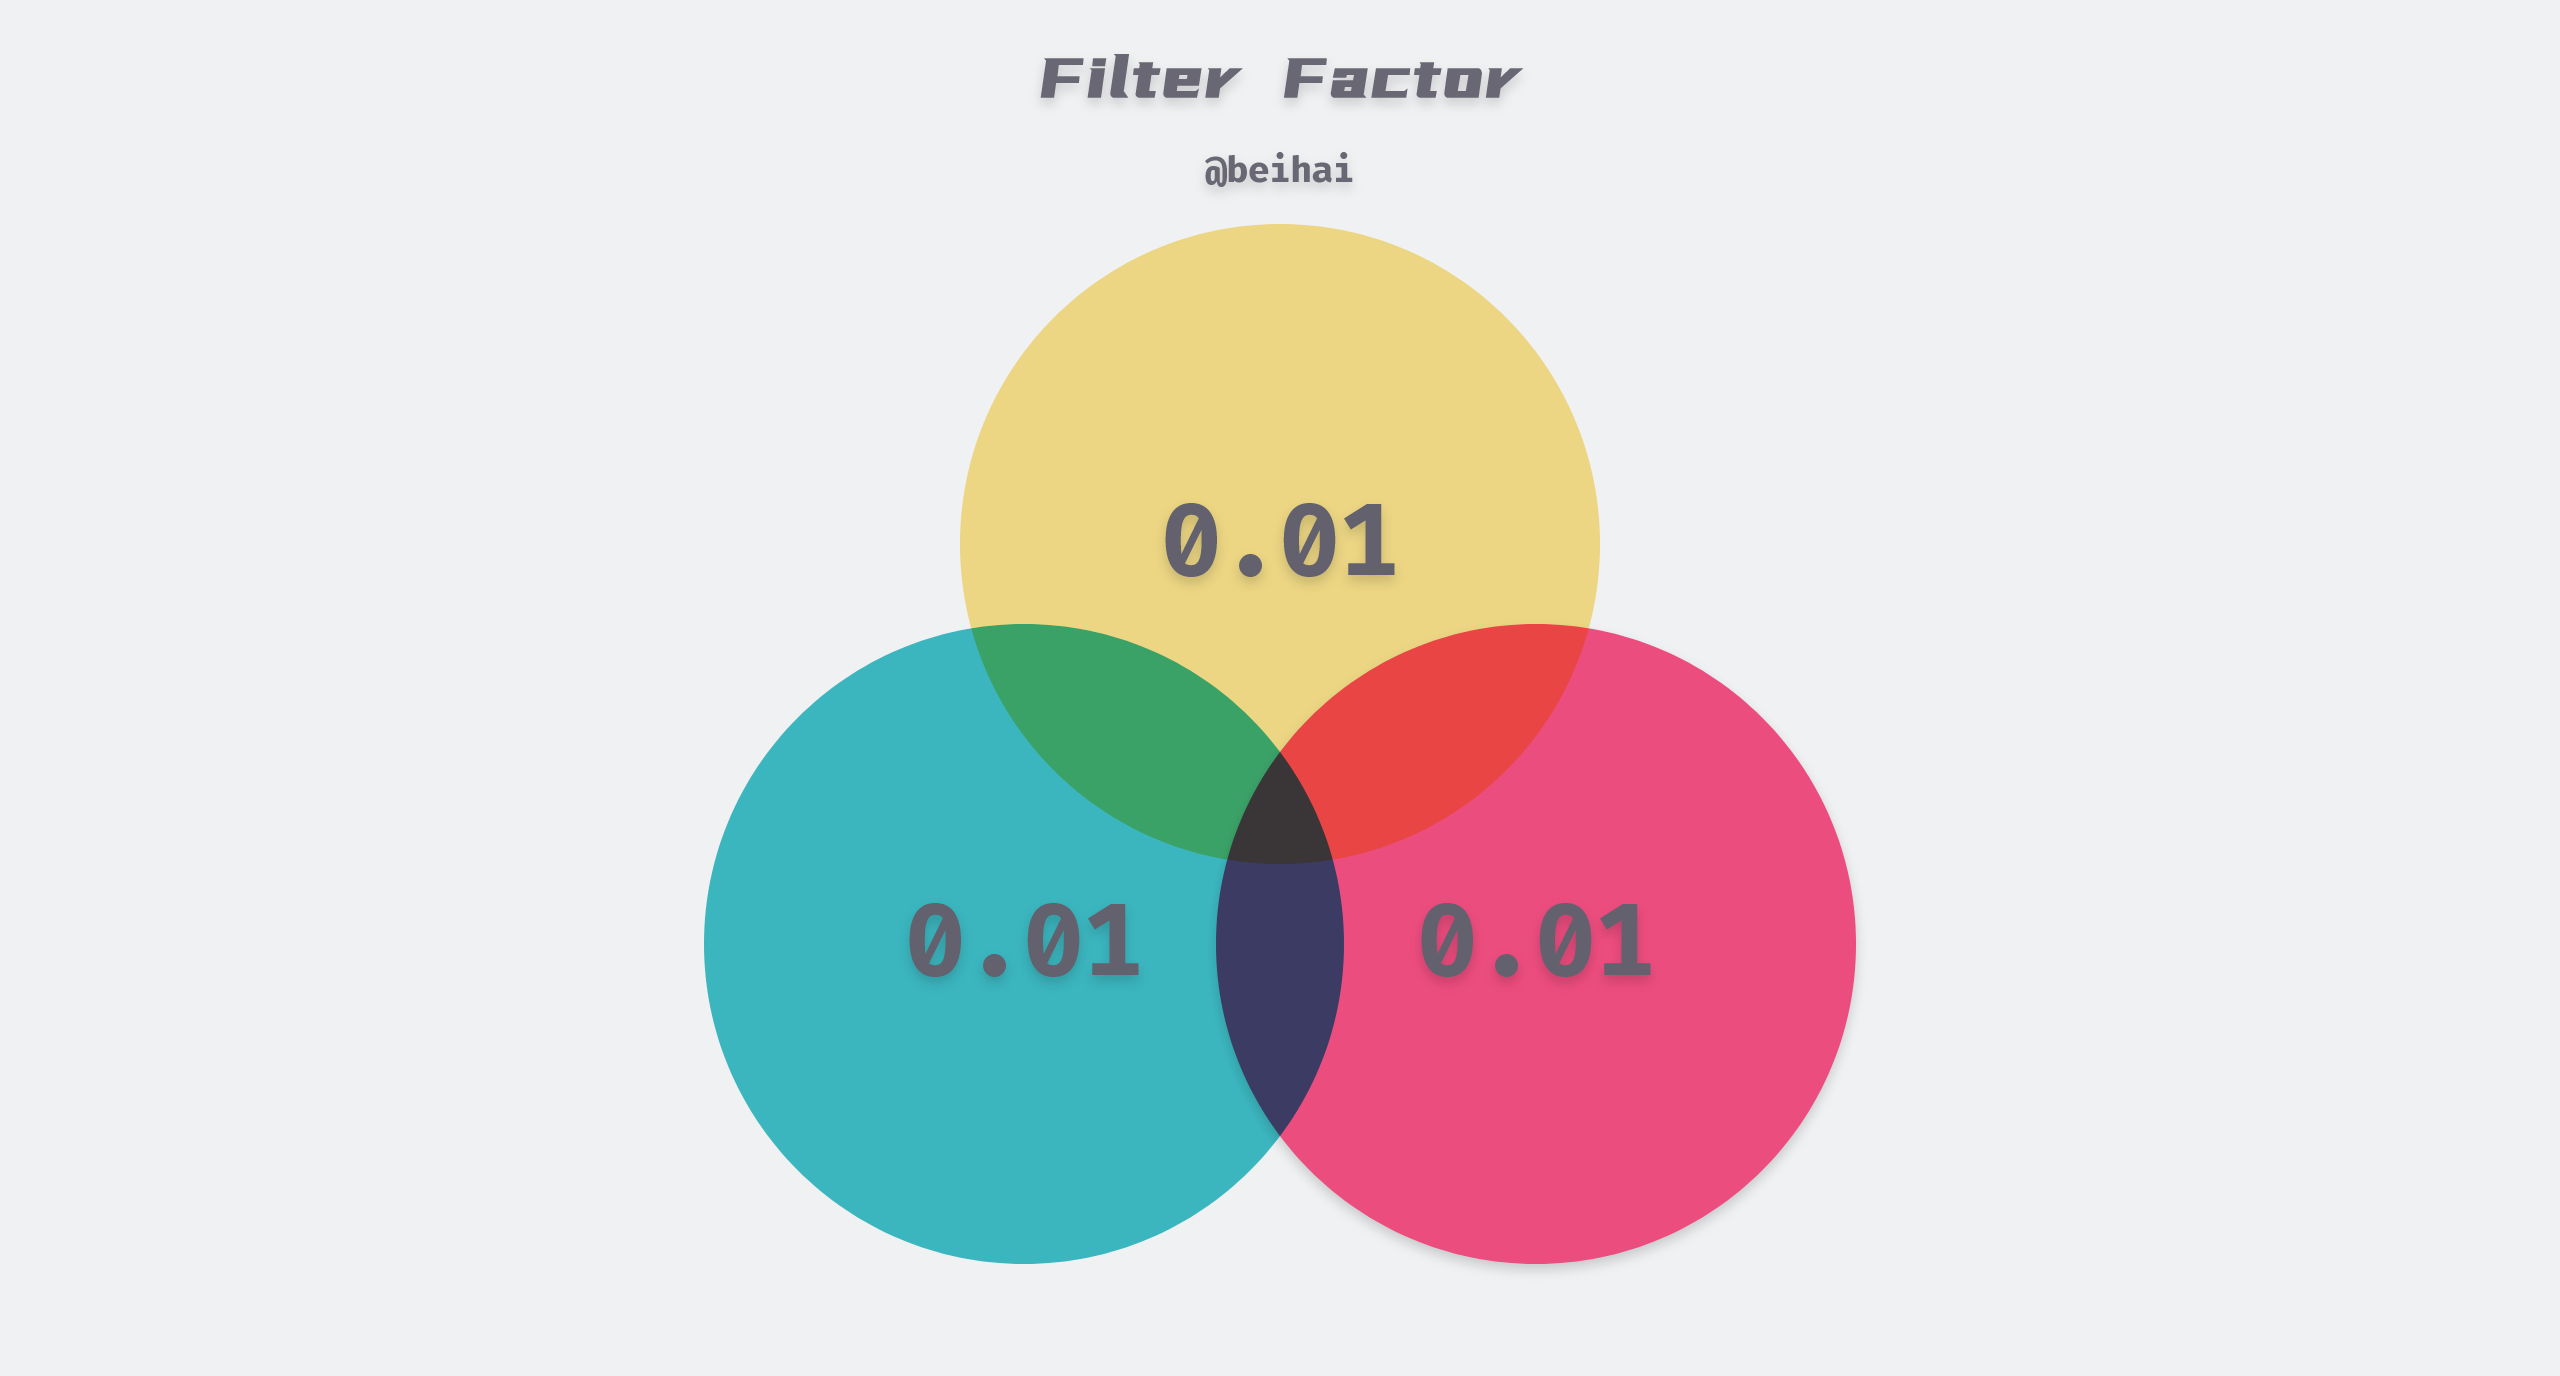 Filter Factor